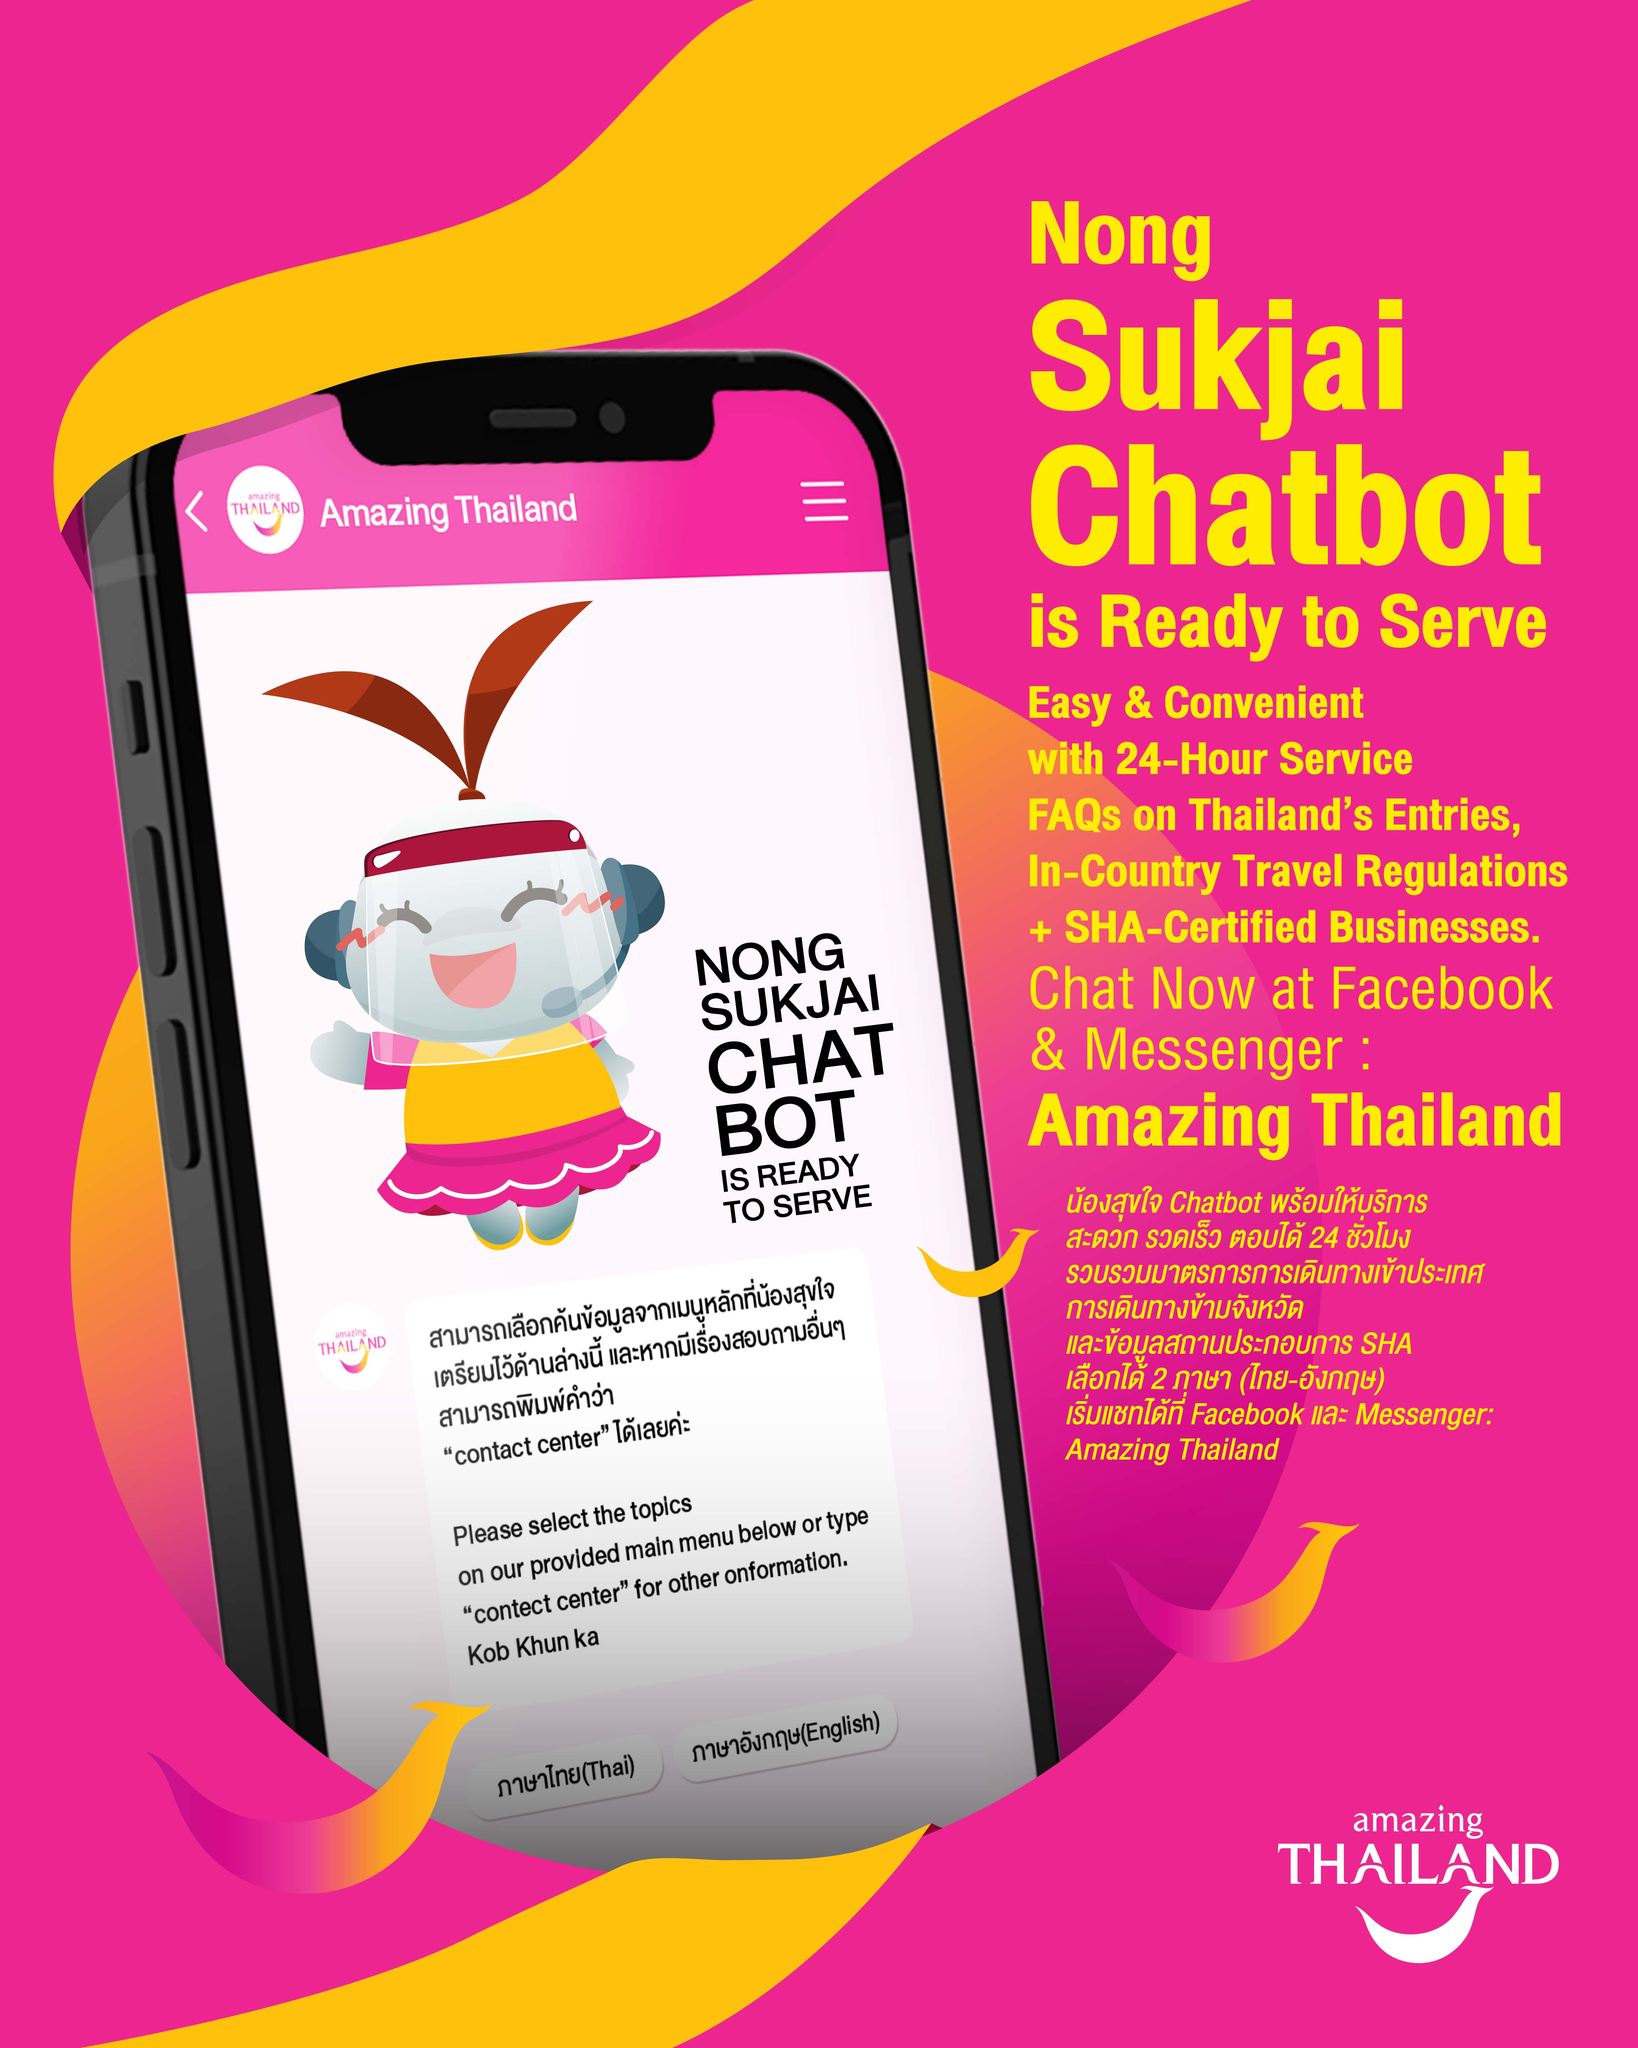 Nong Sukjai Chatbot